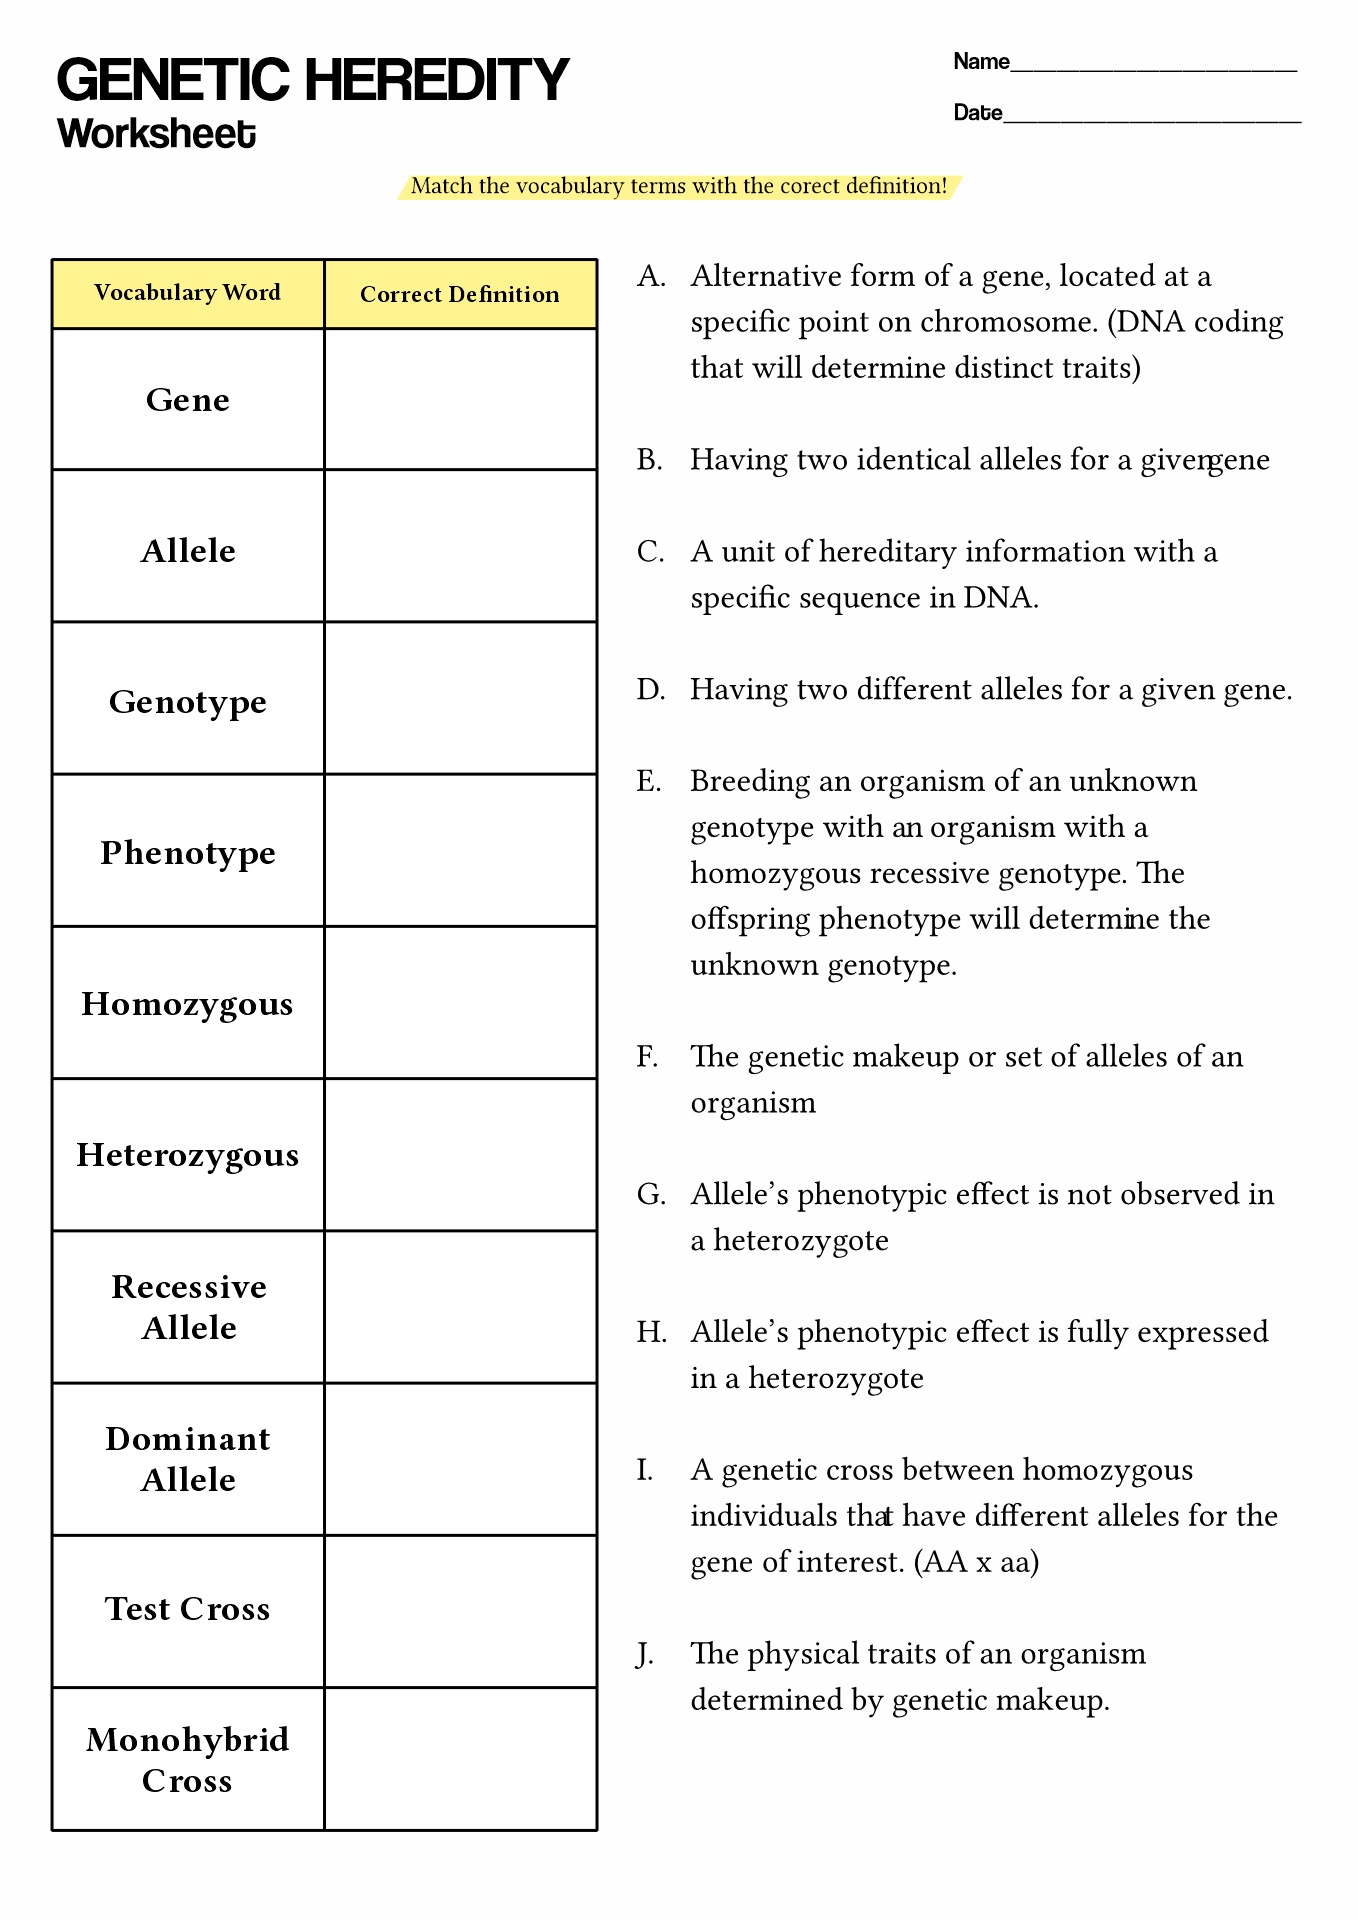 Genetics Heredity Worksheet Image